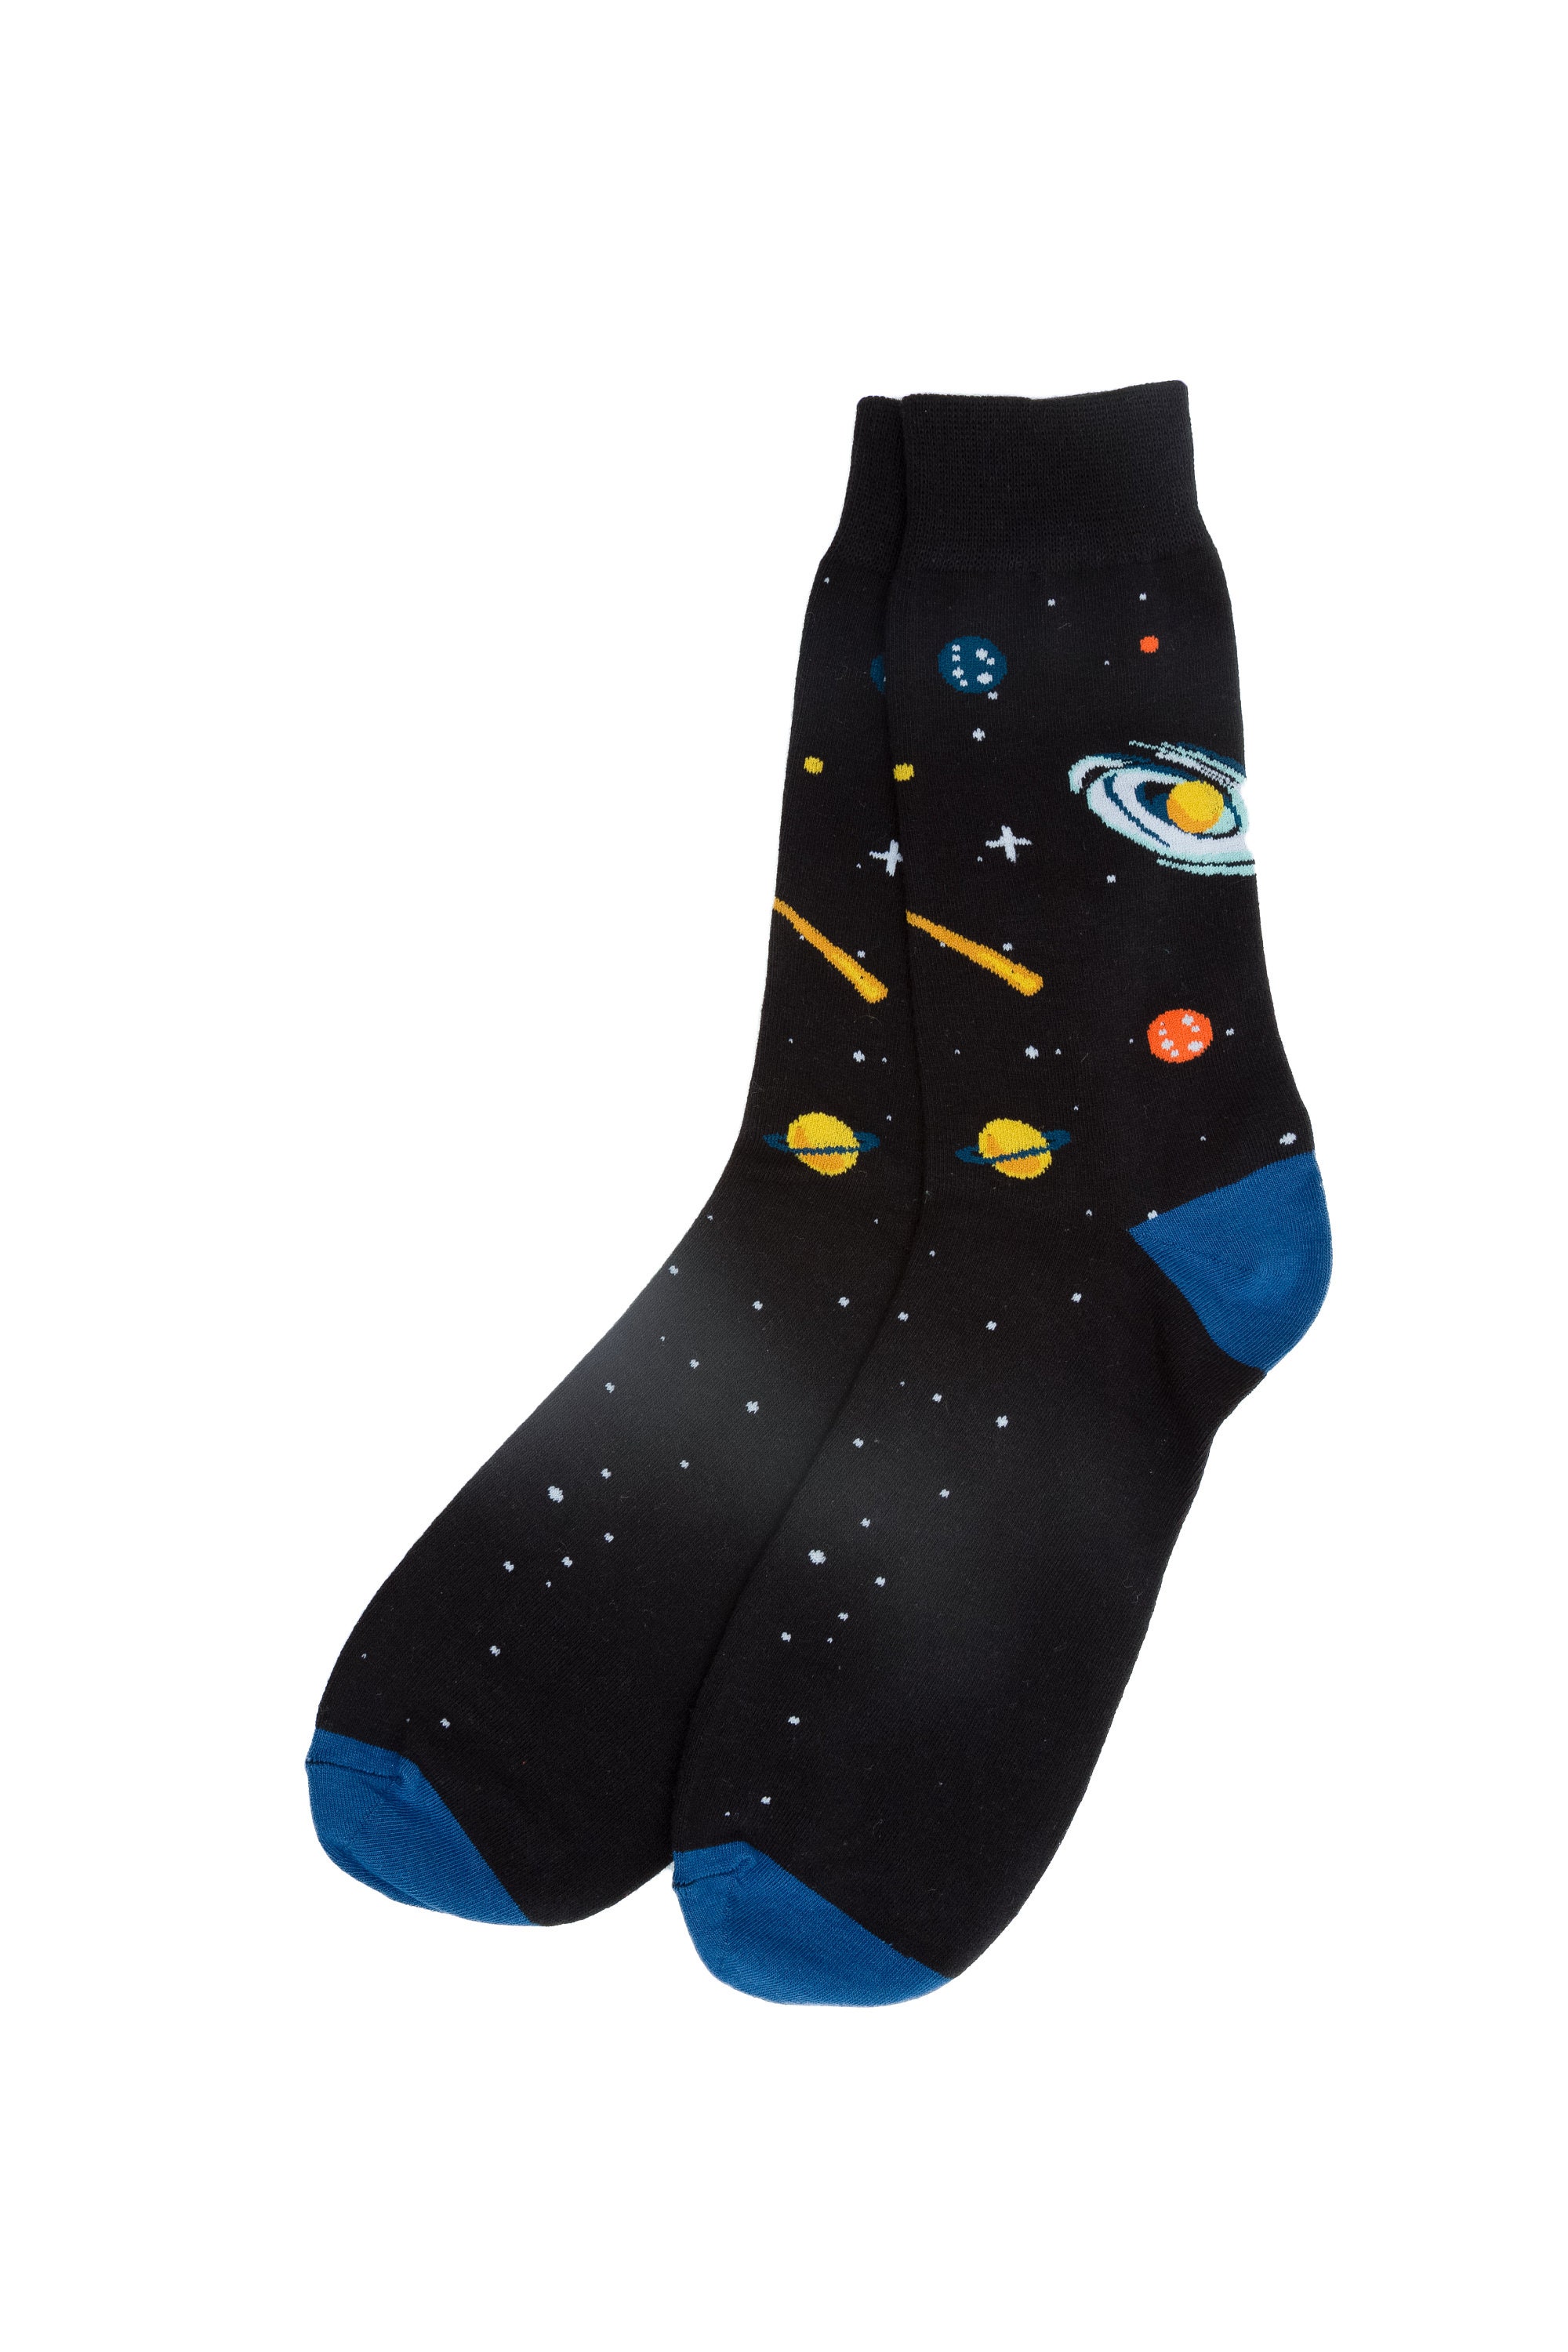 Outer Space Happy Space Socks Funky Socks Cool Socks - Etsy UK